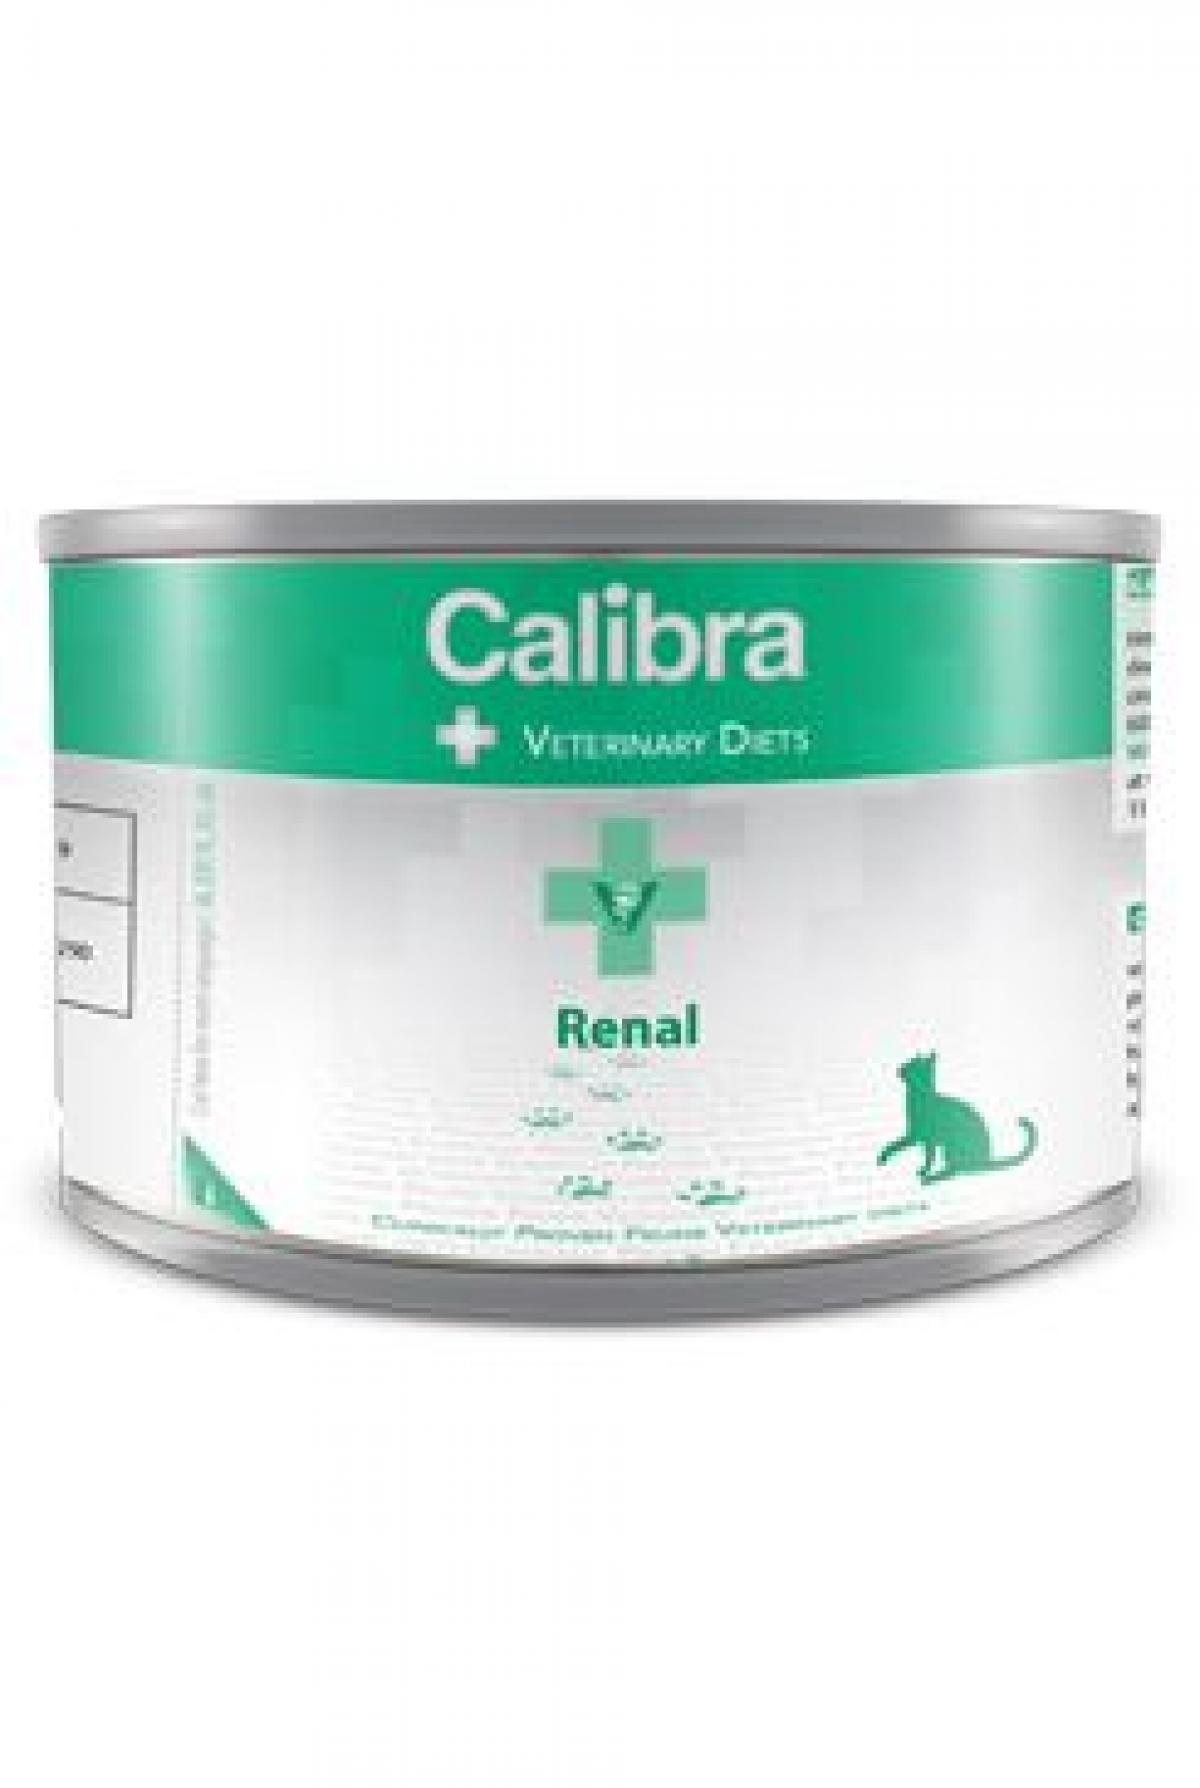 Calibra VD Cat Renal konz. 200g